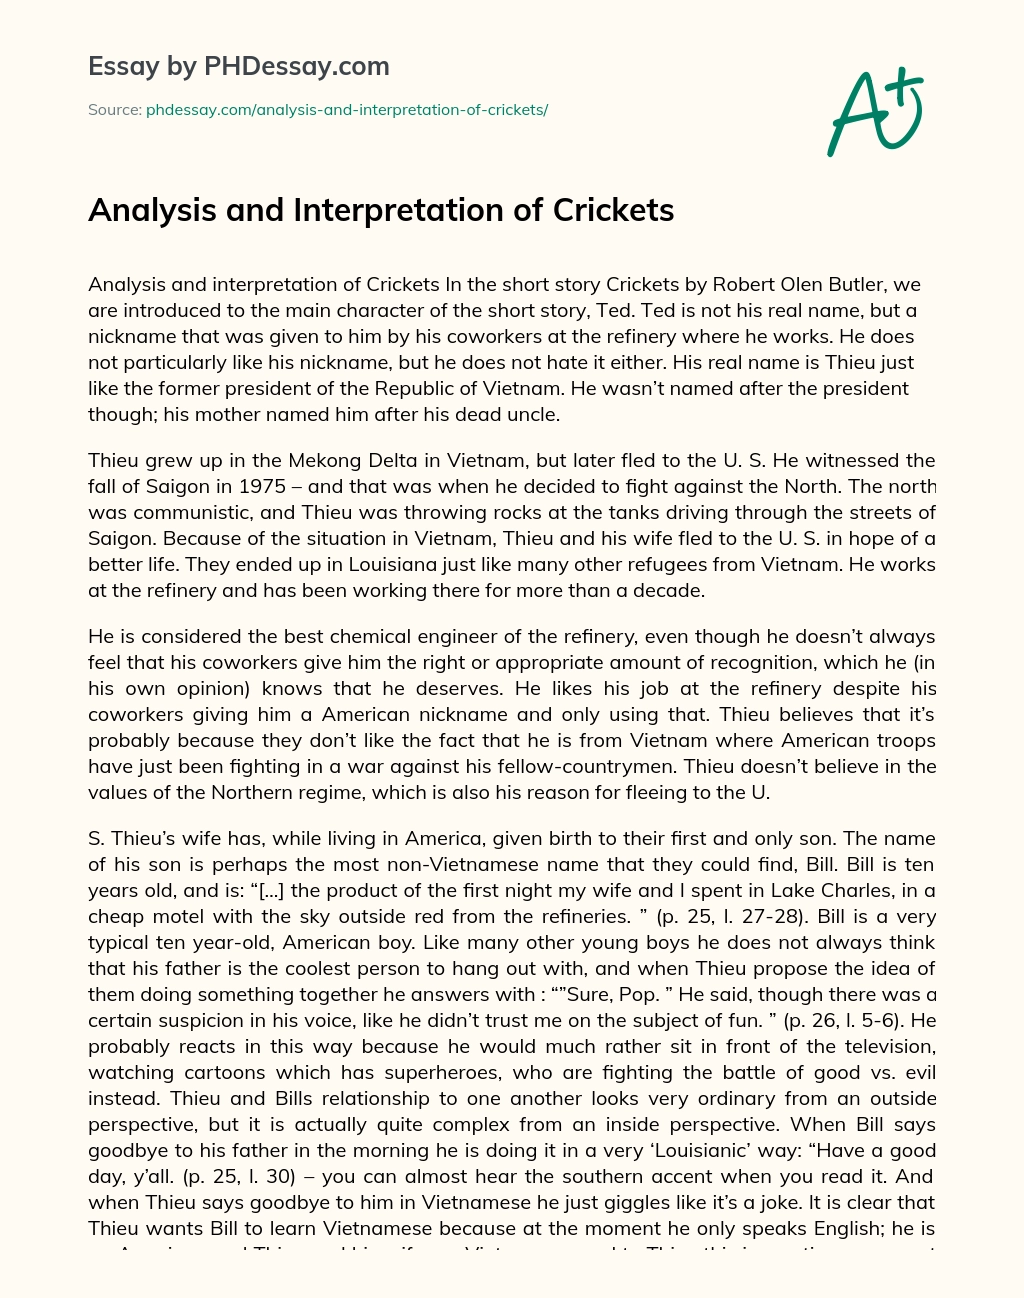 Analysis and Interpretation of Crickets essay